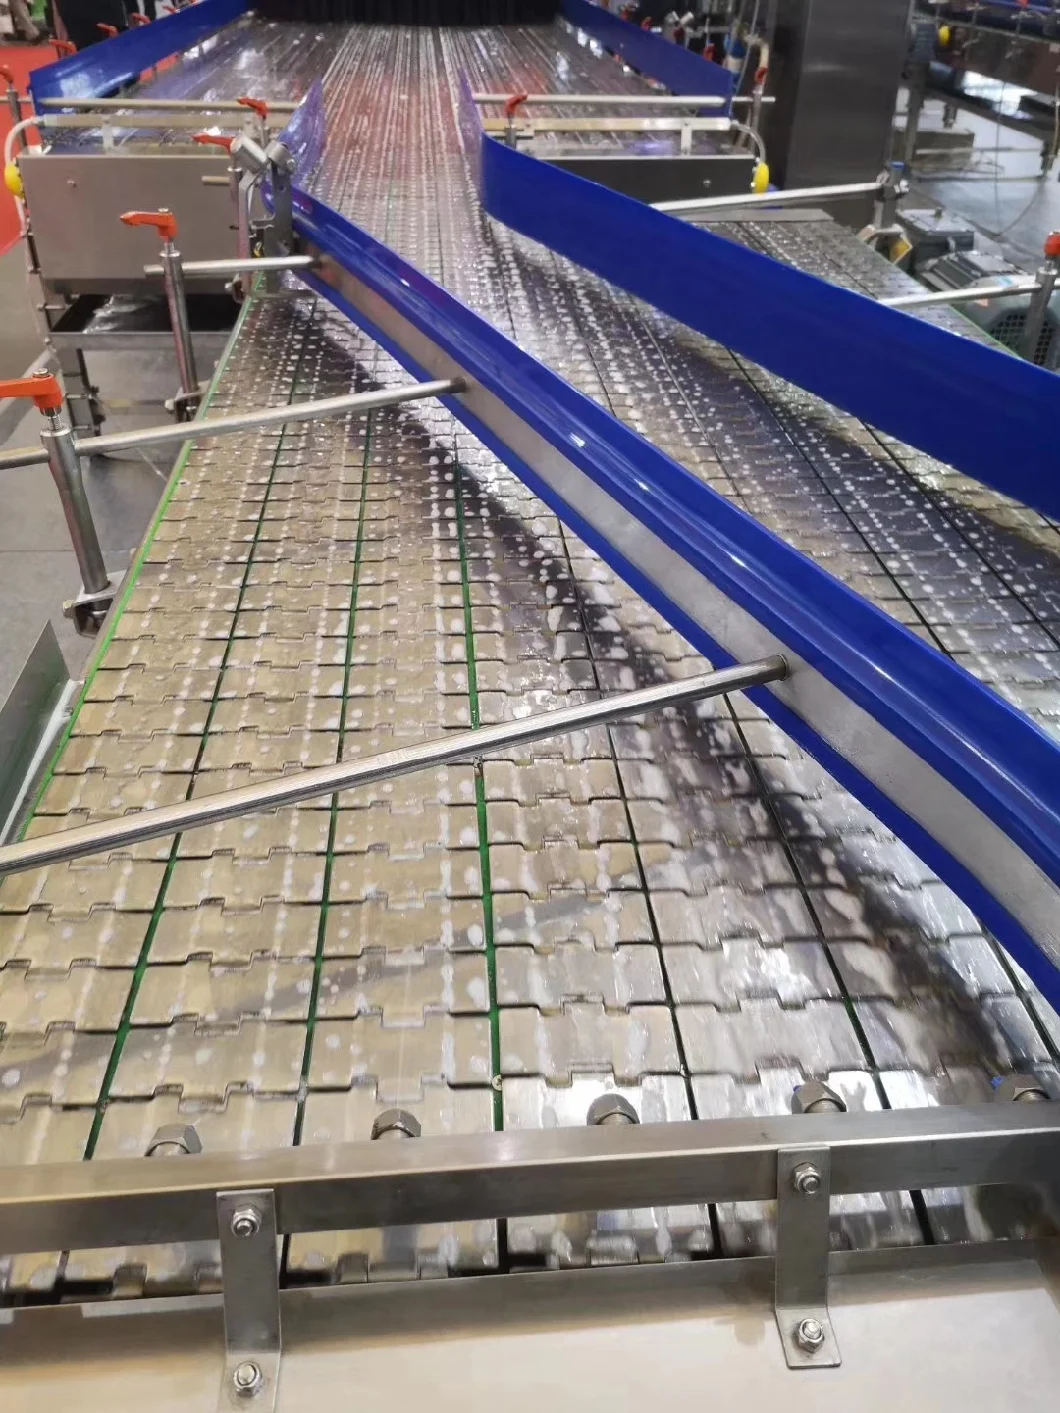 Ss 304 Steel Belt Industrial Slat Band Conveyor Systems Bottles Transfer Ss Chain Conveyor